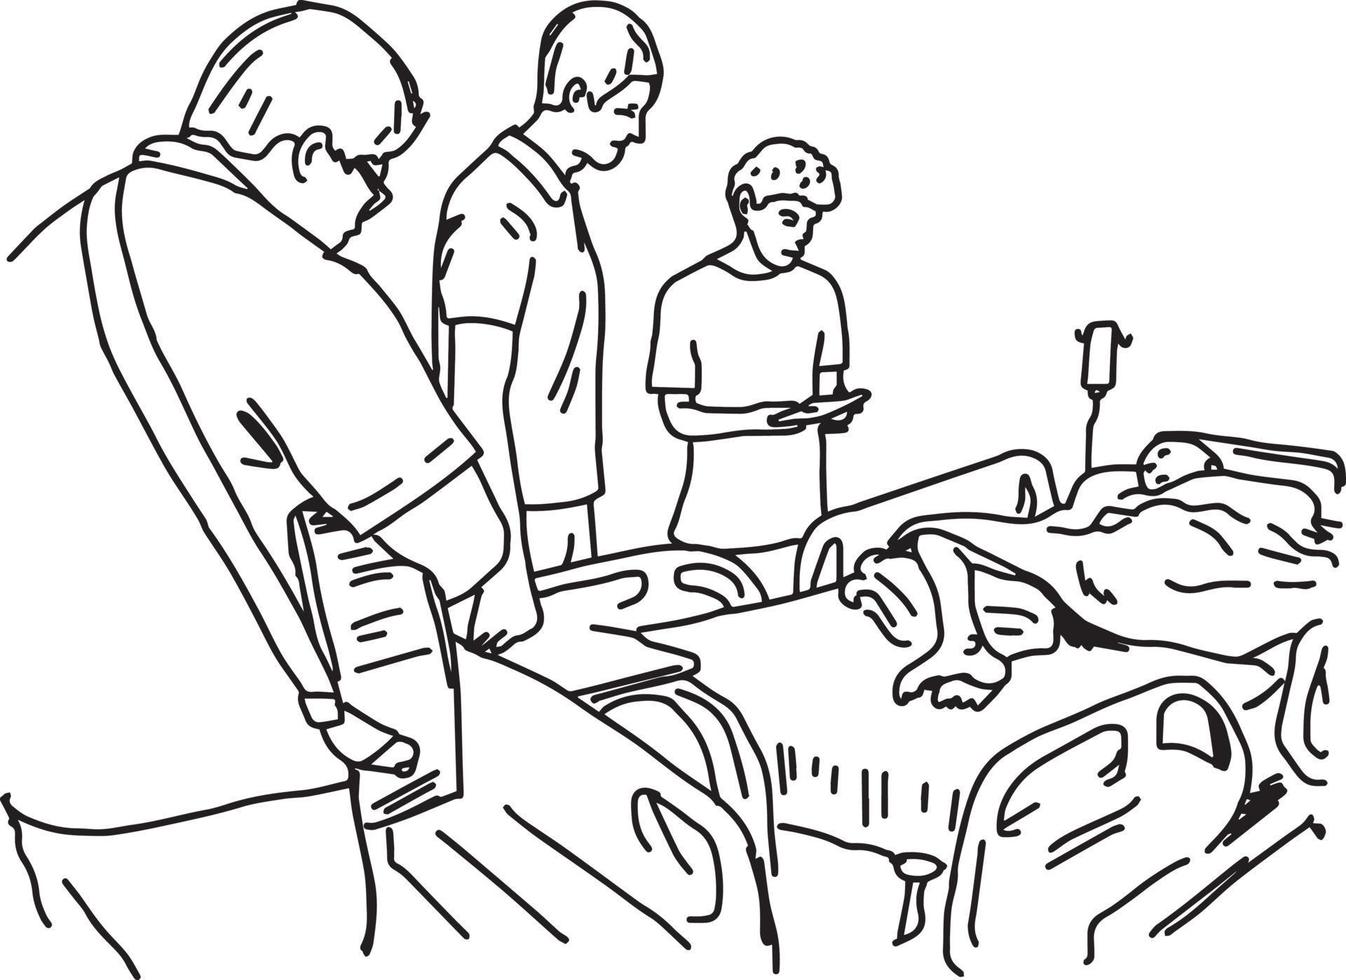 people visit patient in hospital - vector illustration